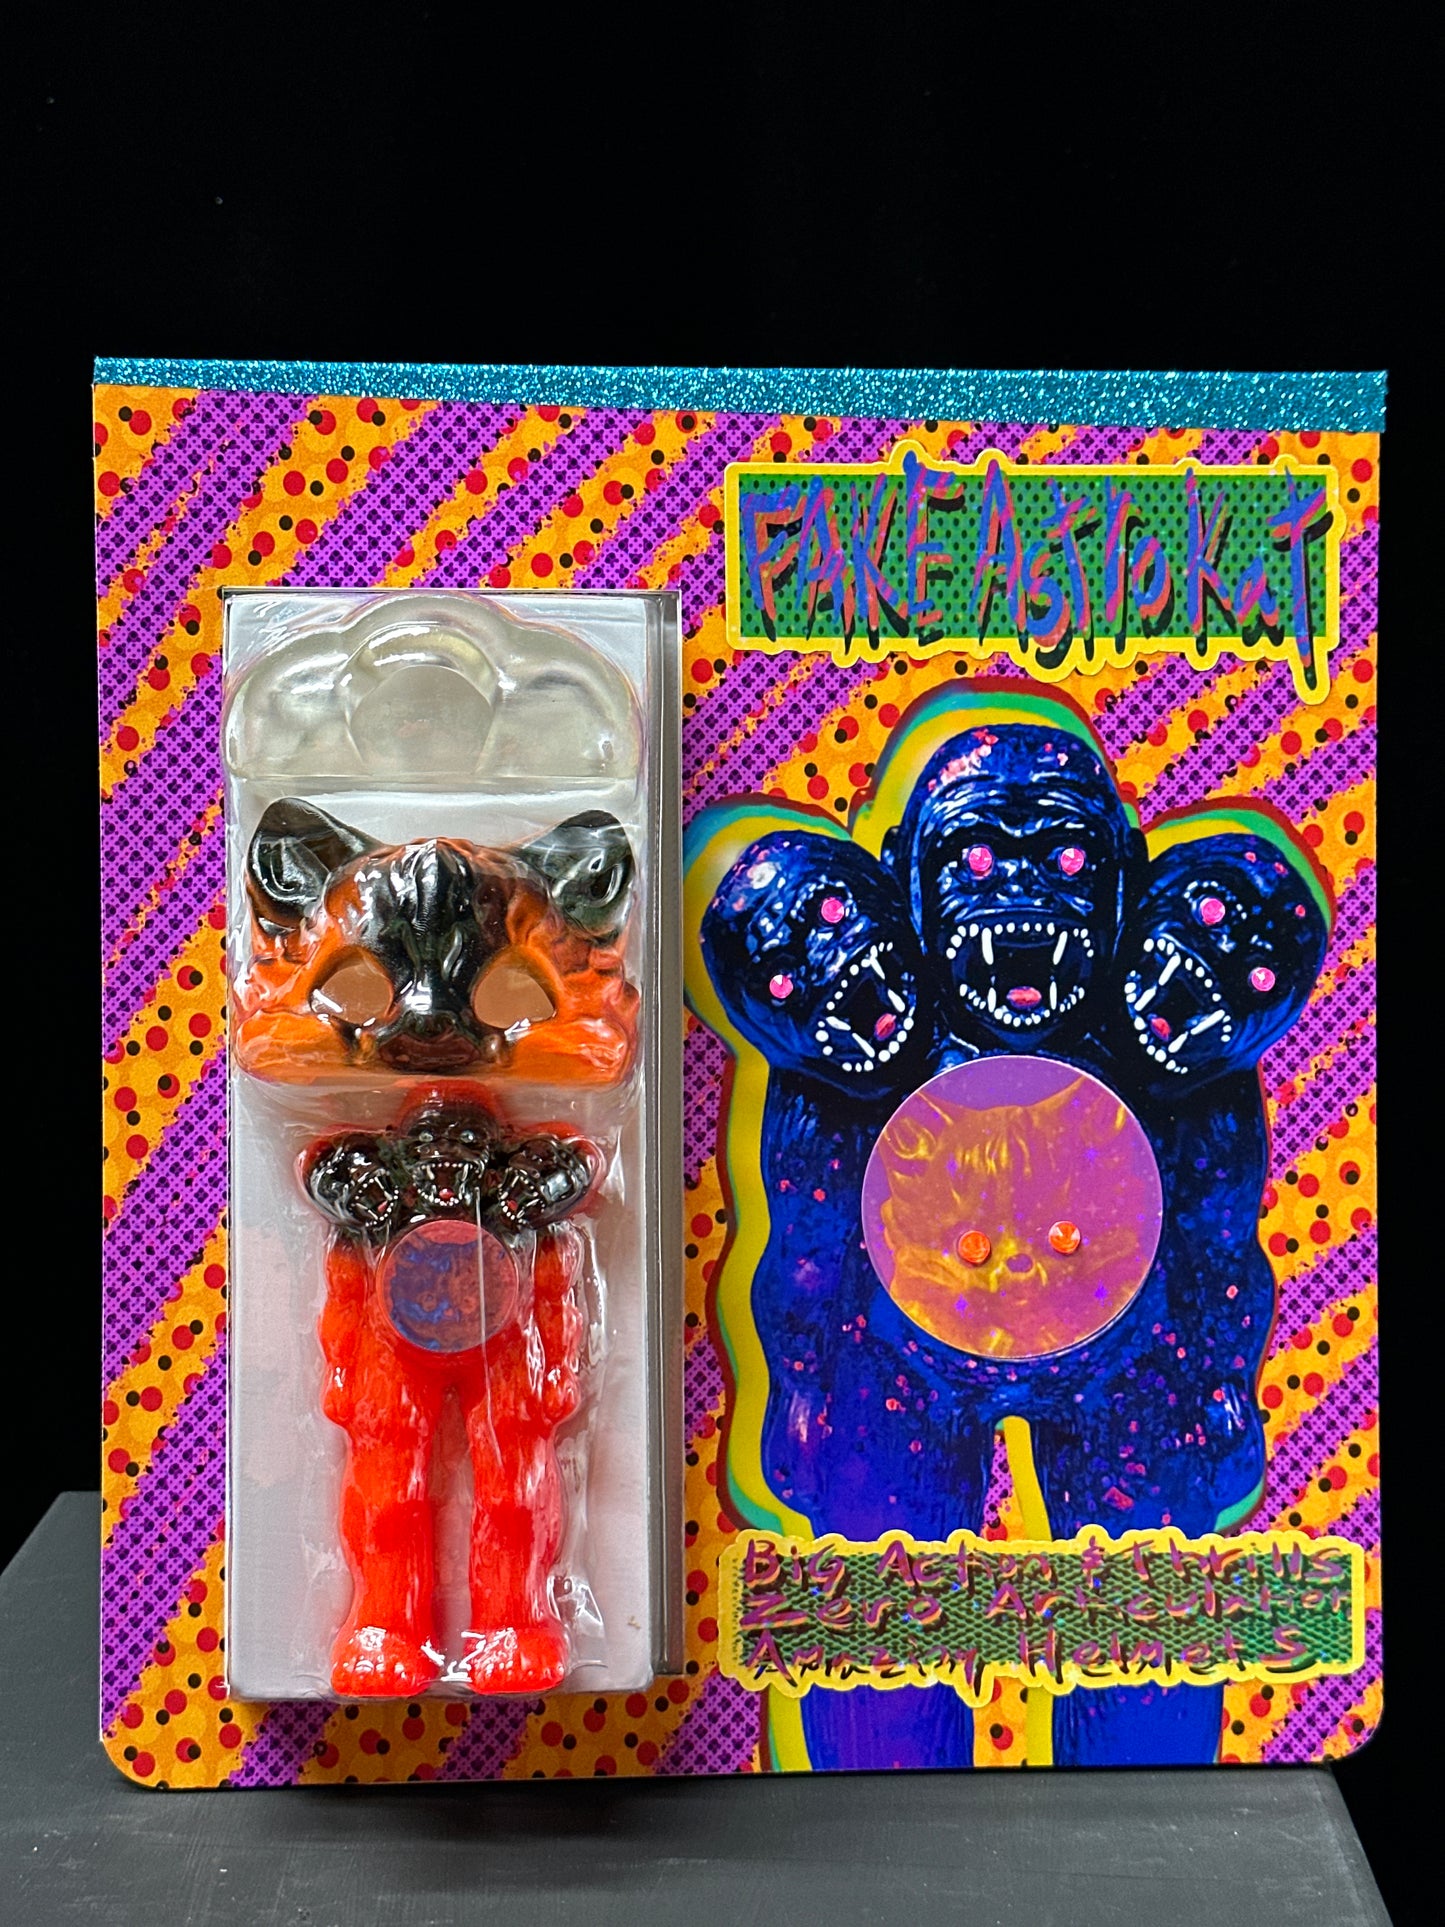 FAKE AstroKat: Neon Orange (Limited Deluxe Package)